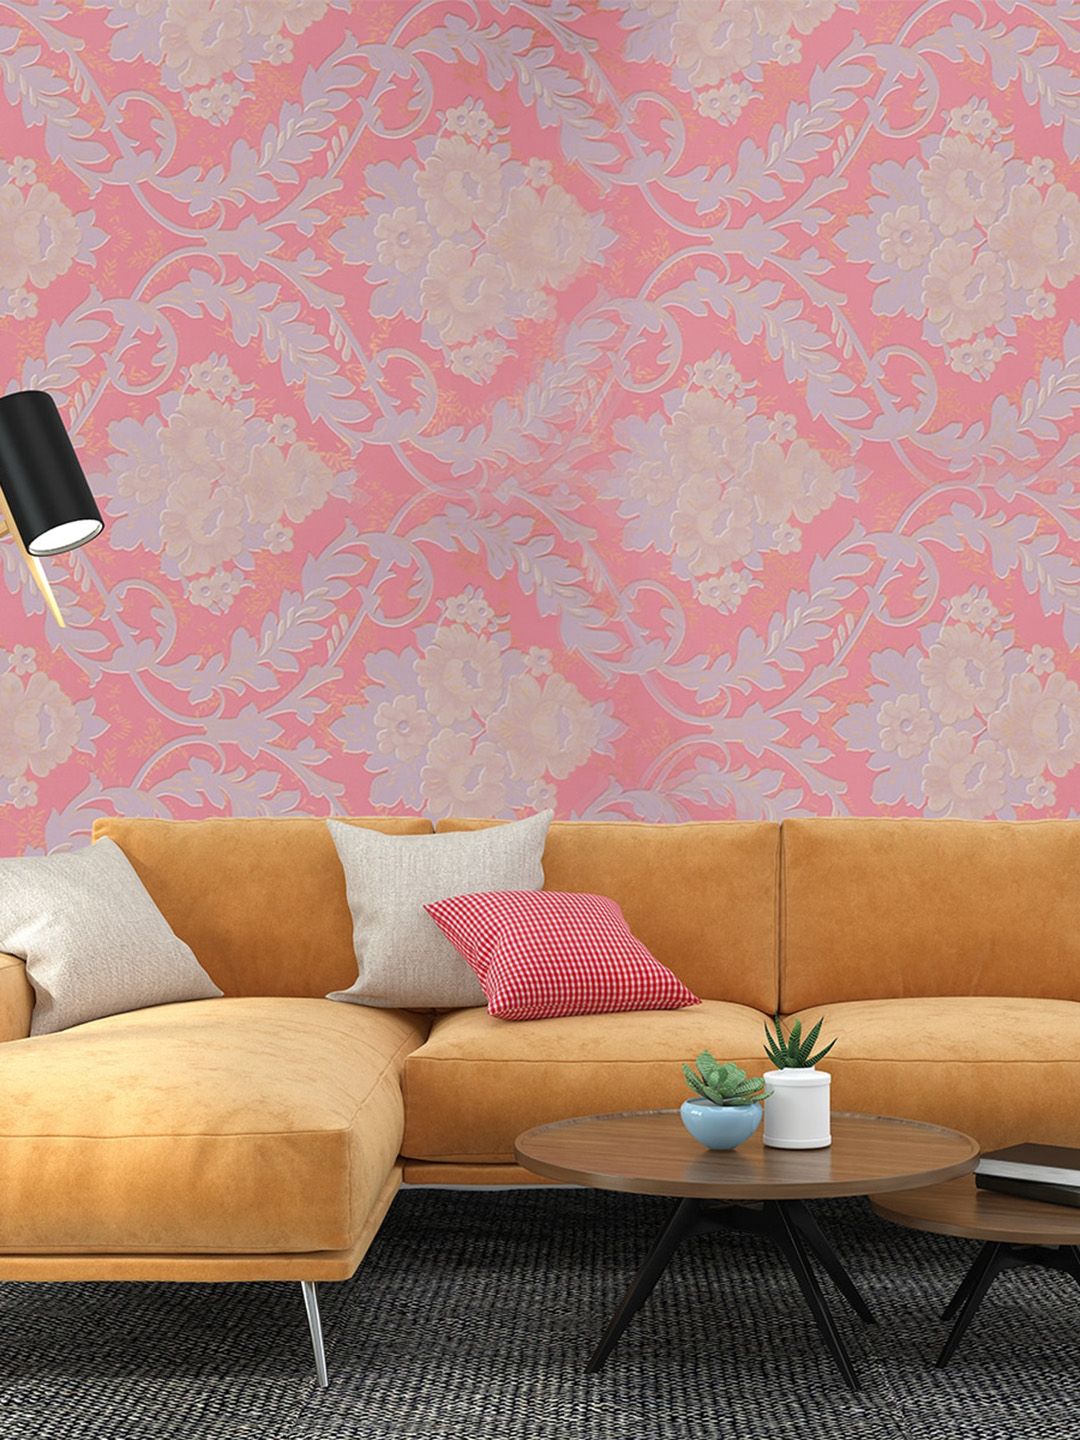 Ispace Pink & Off-White Printed Waterproof Wallpaper Price in India